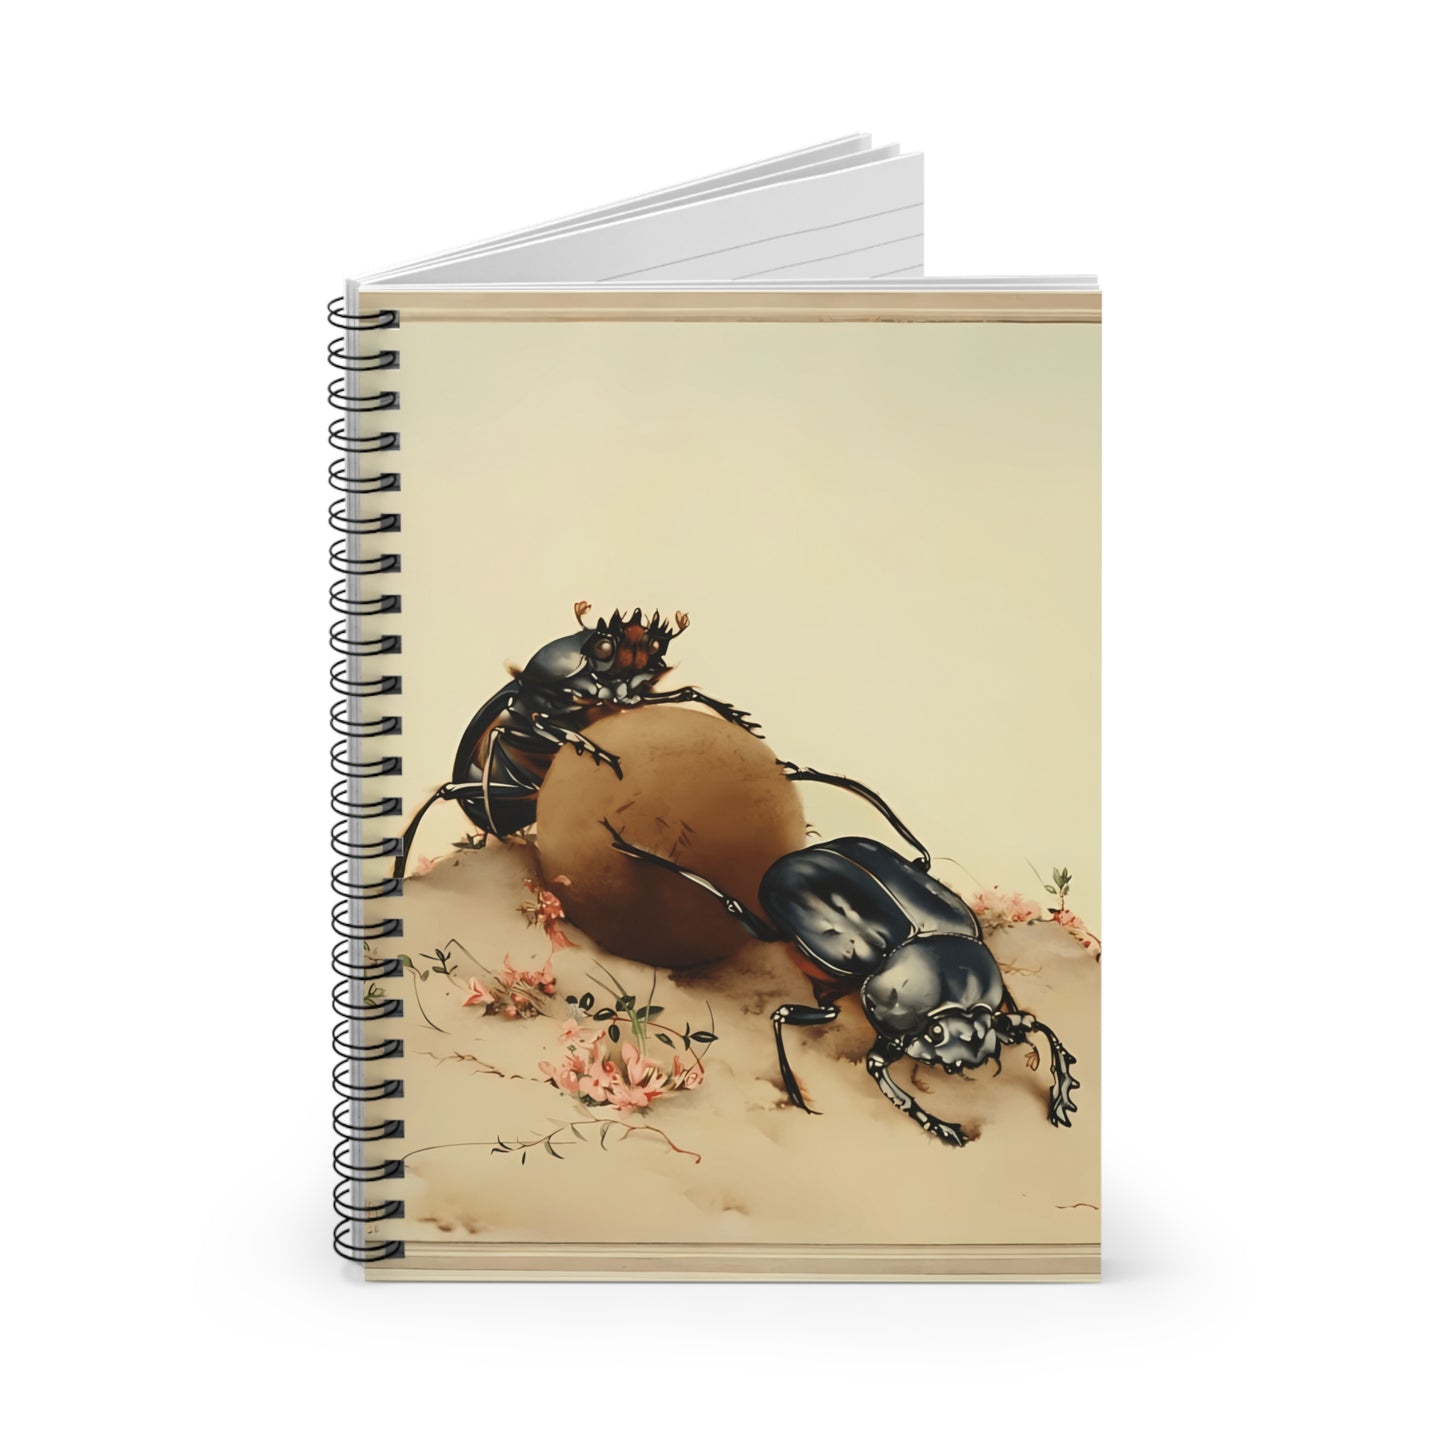 Vintage Scarab Dung Beetle - Spiral Notebook - Ruled Line